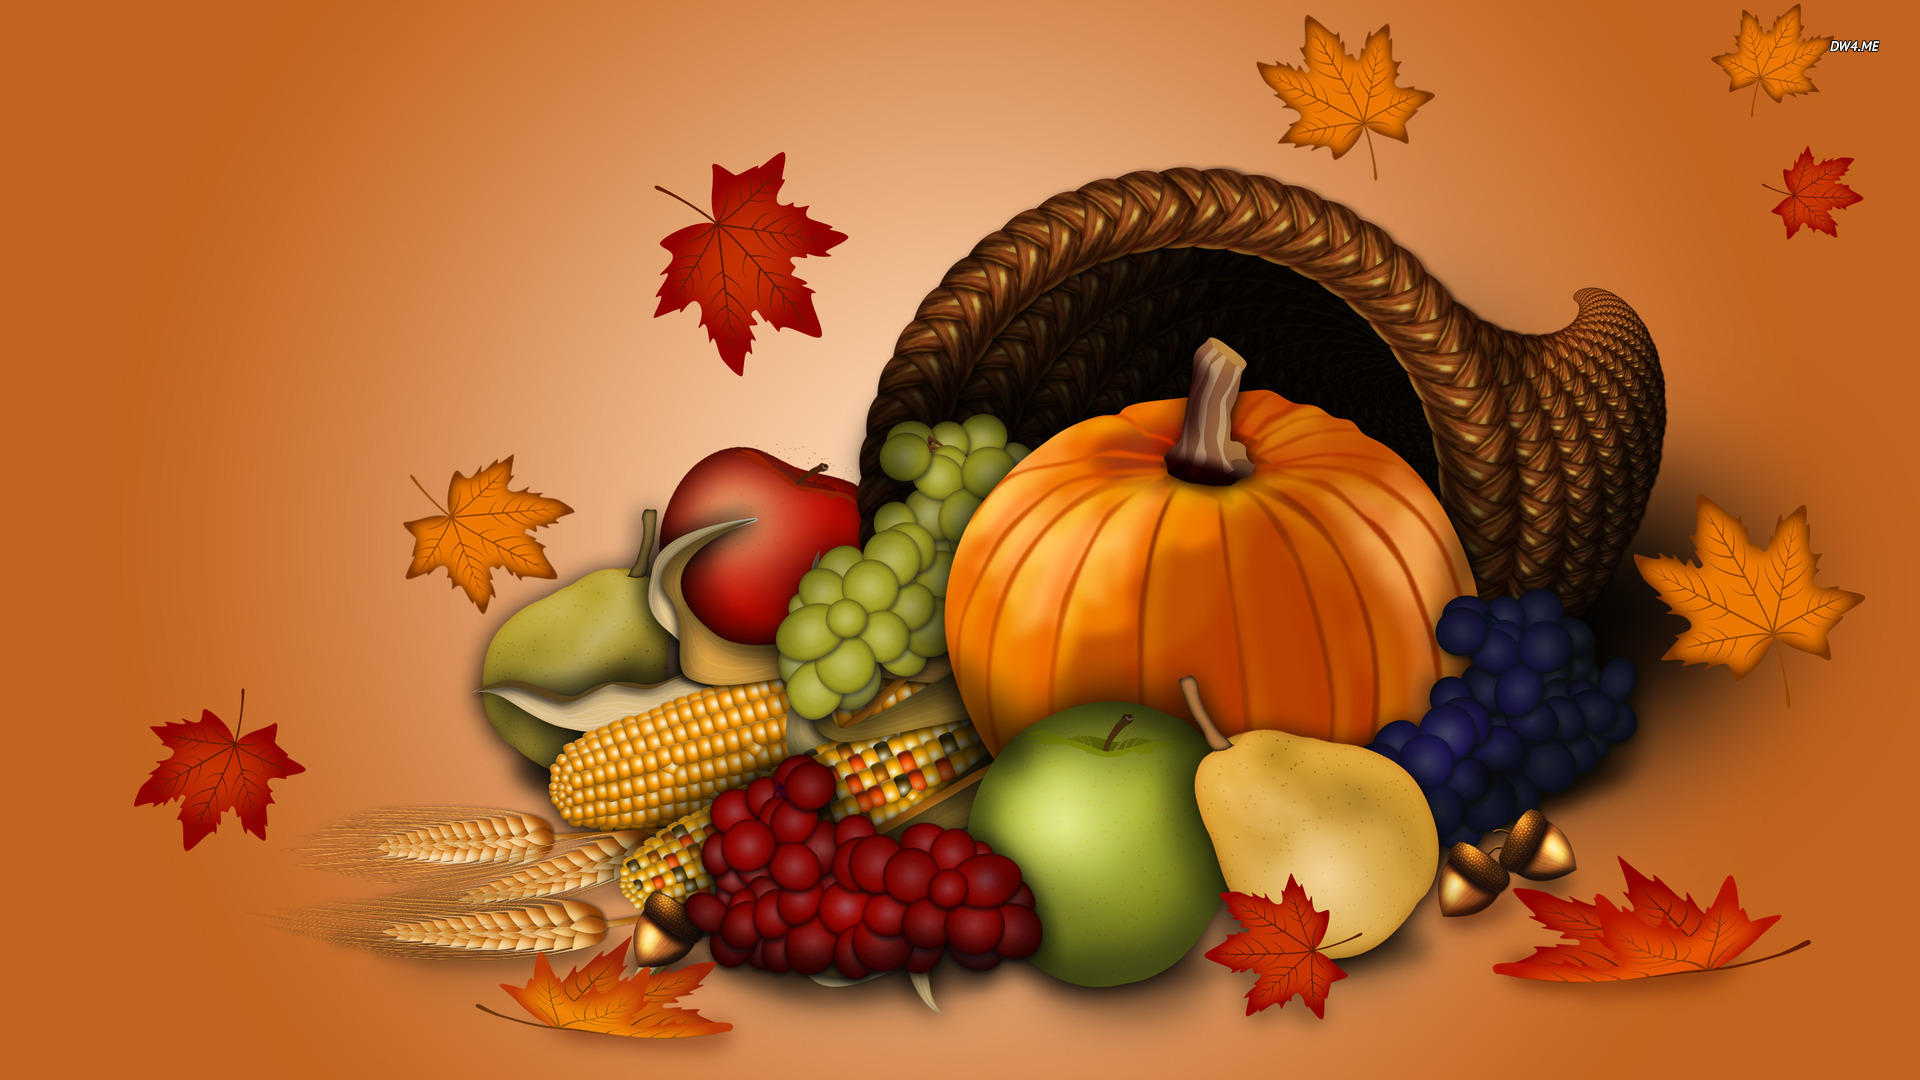 thanksgiving wallpaper,natural foods,vegetable,still life,calabaza,still life photography